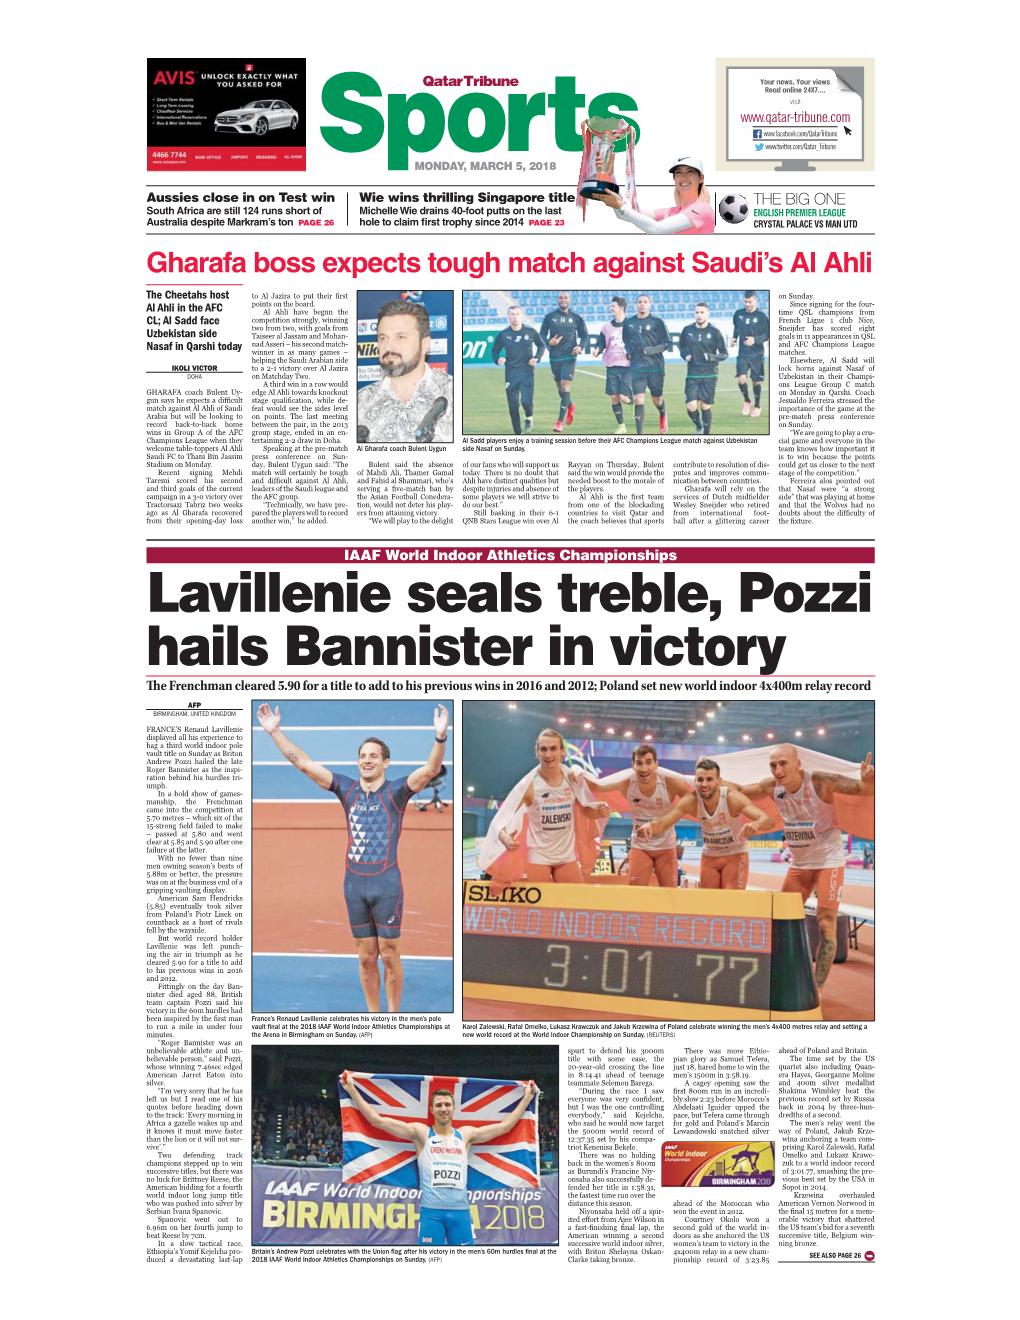 Lavillenie Seals Treble, Pozzi Hails Bannister in Victory